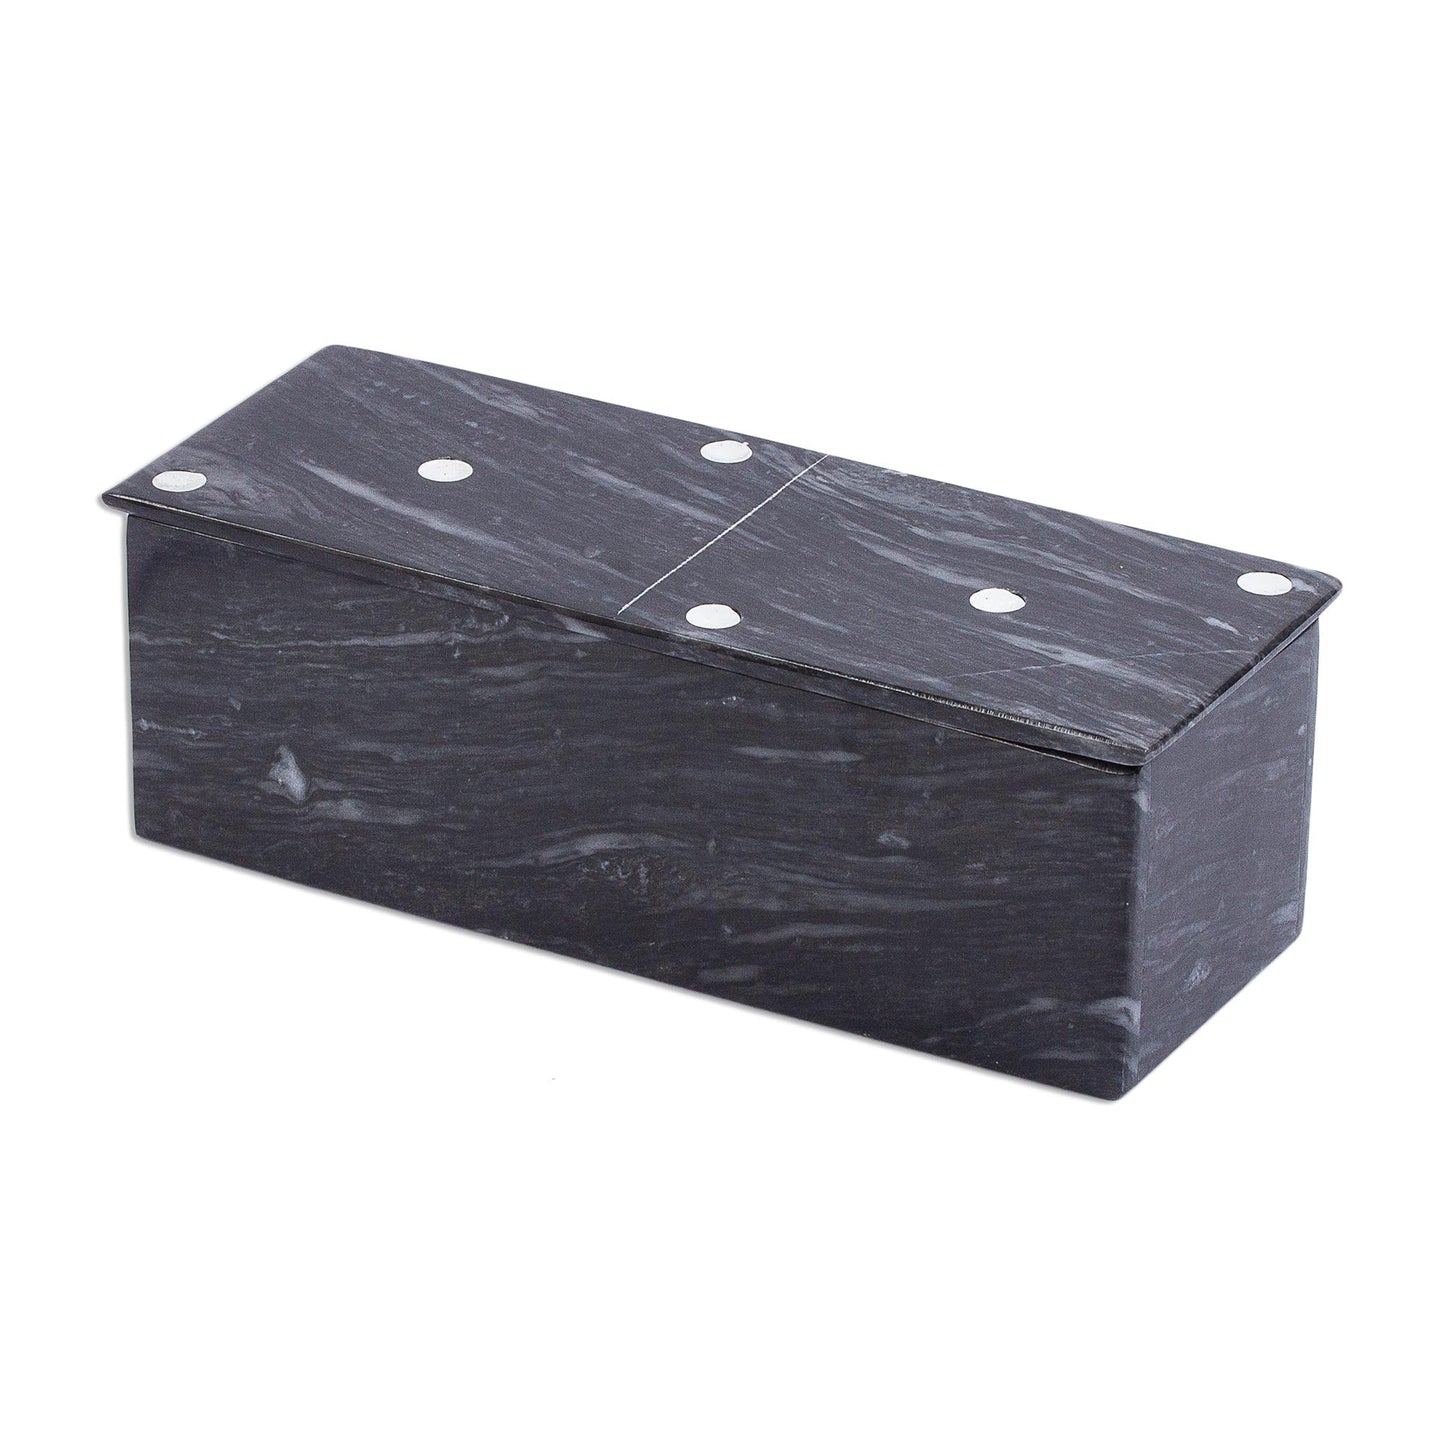 Fascinating Challenge Dark Grey Marble Domino Set with Storage Box (9 Inch)